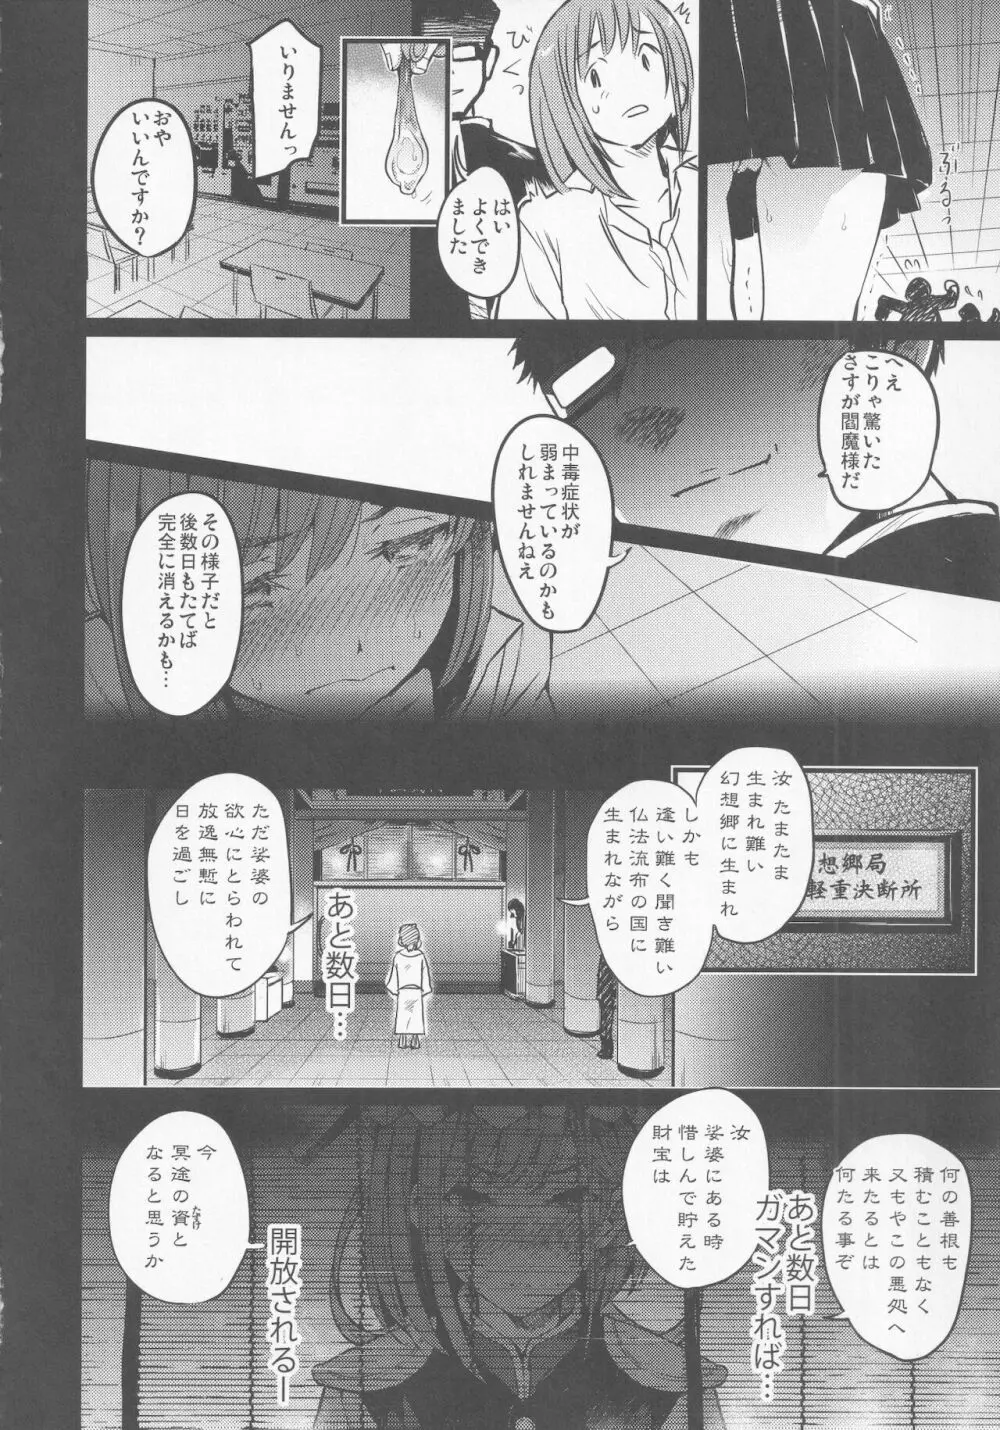 牝穴裁判 - page25